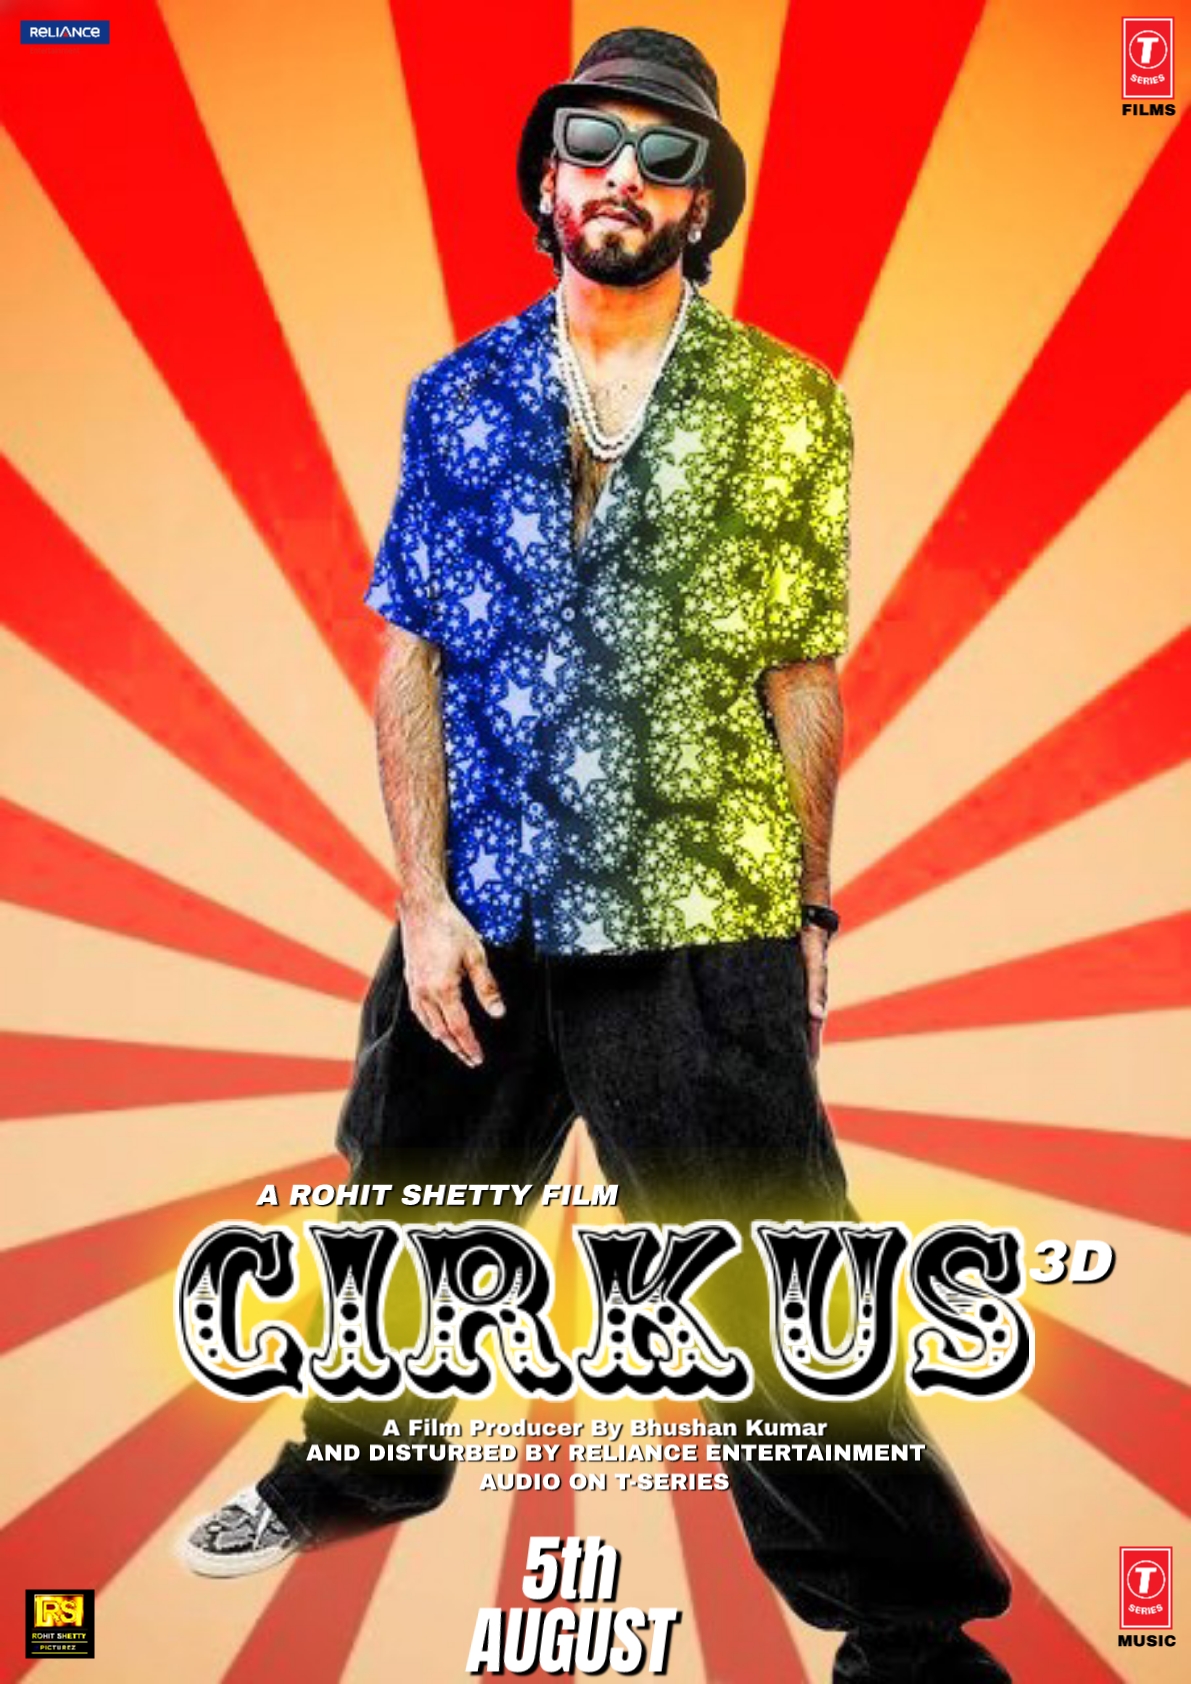 Cirkus Movie Review